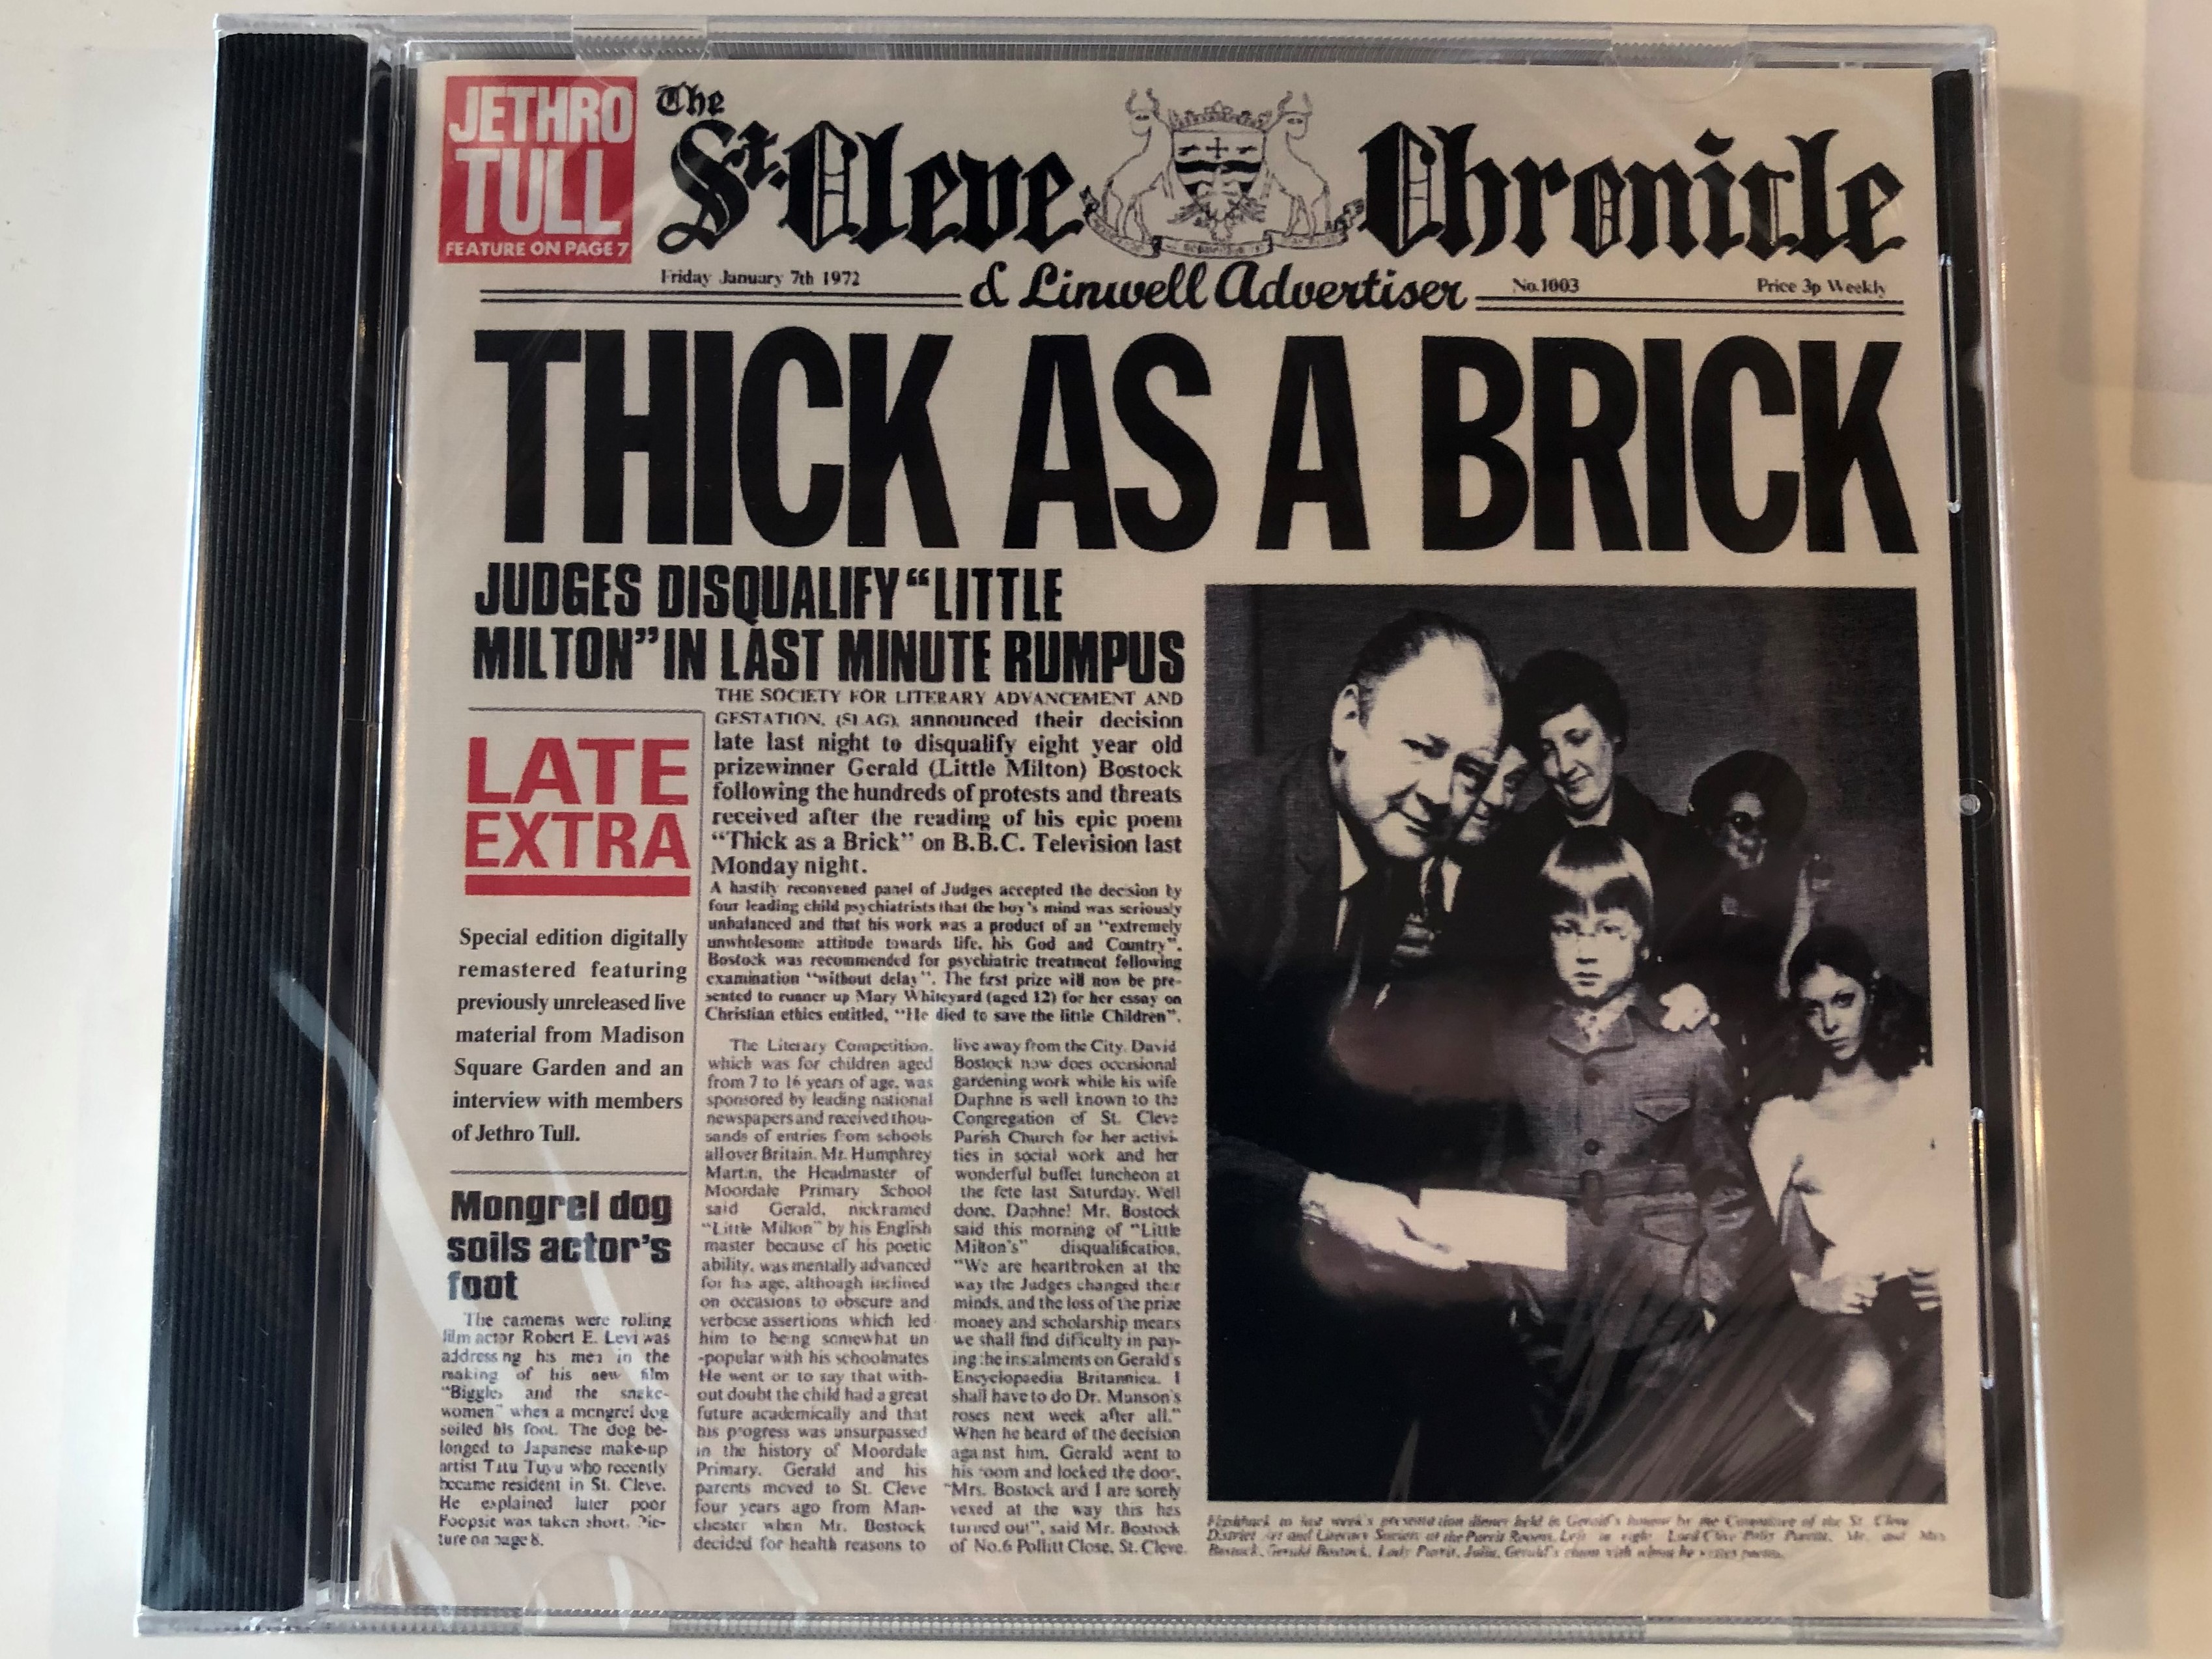 jethro-tull-thick-as-a-brick-emi-music-audio-cd-1997-4-95400-2-1-.jpg